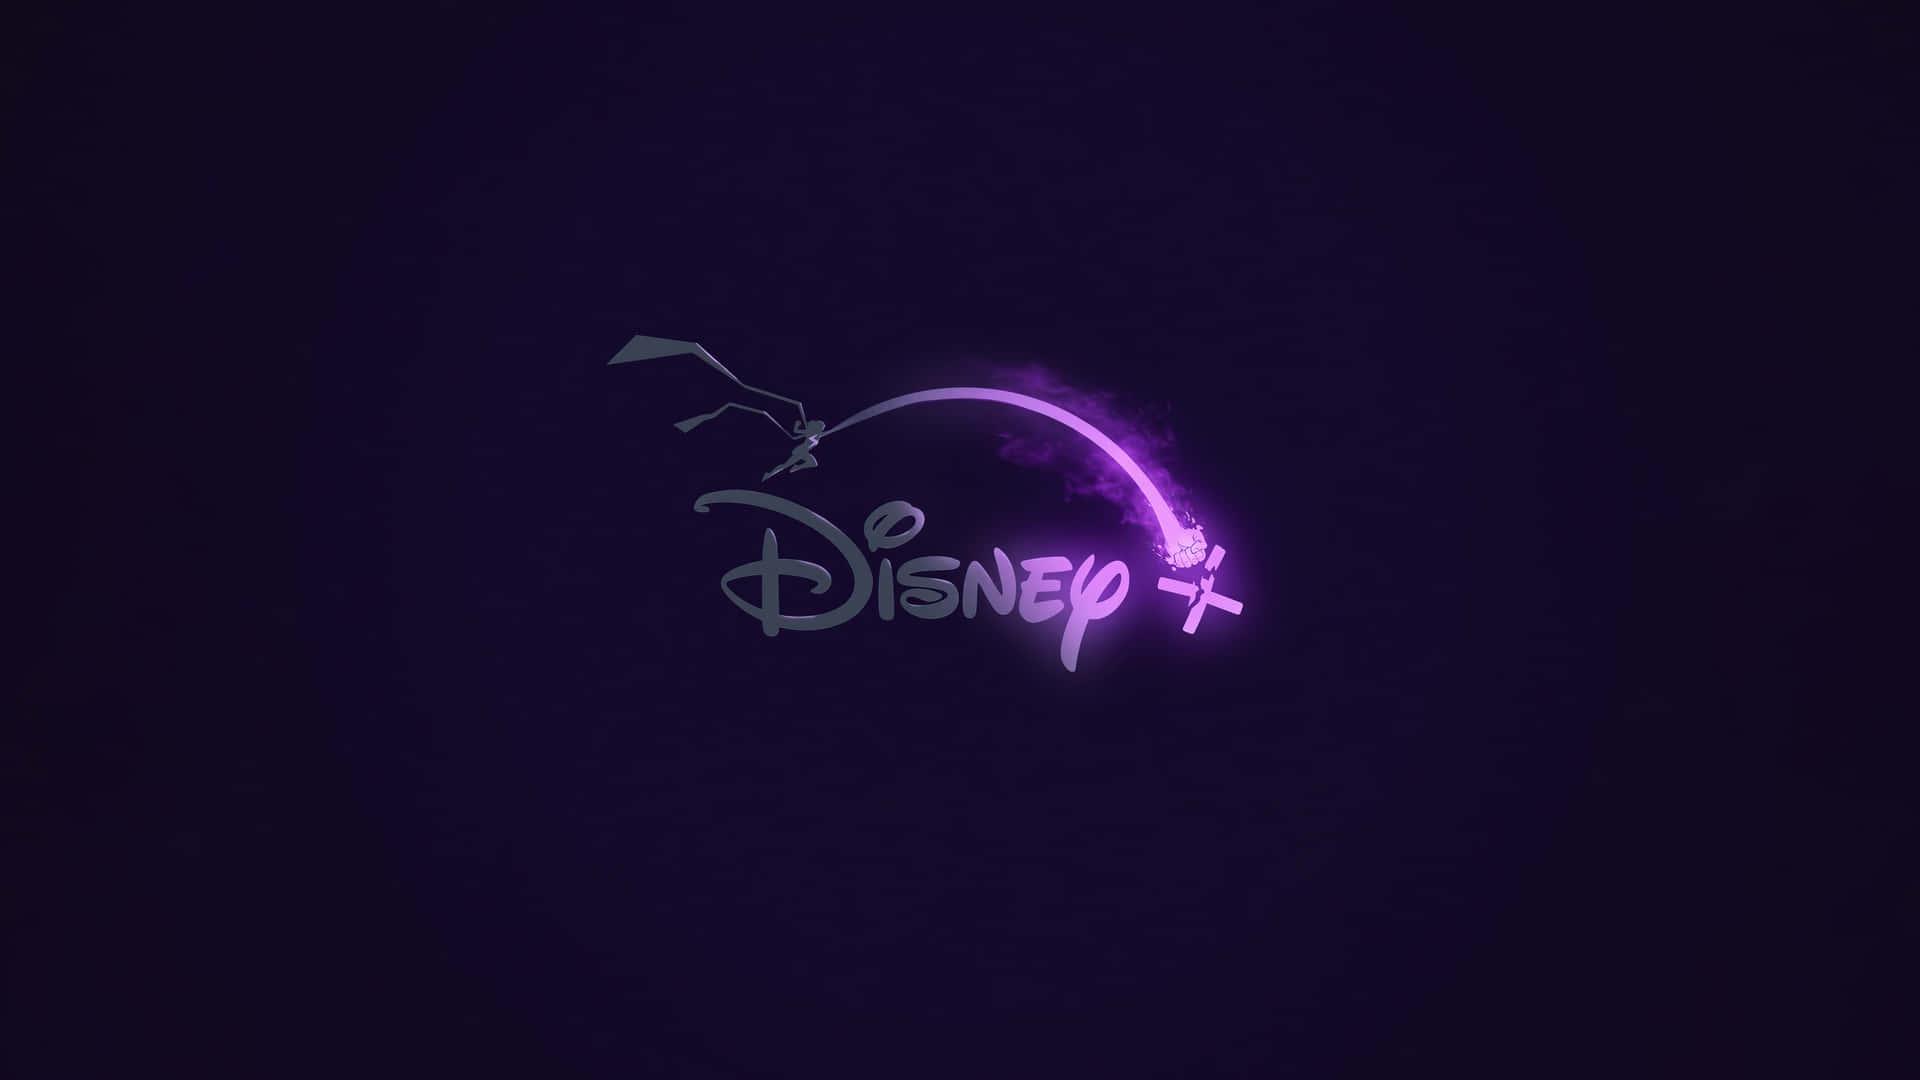 Plano De Fundo Disney 1440p